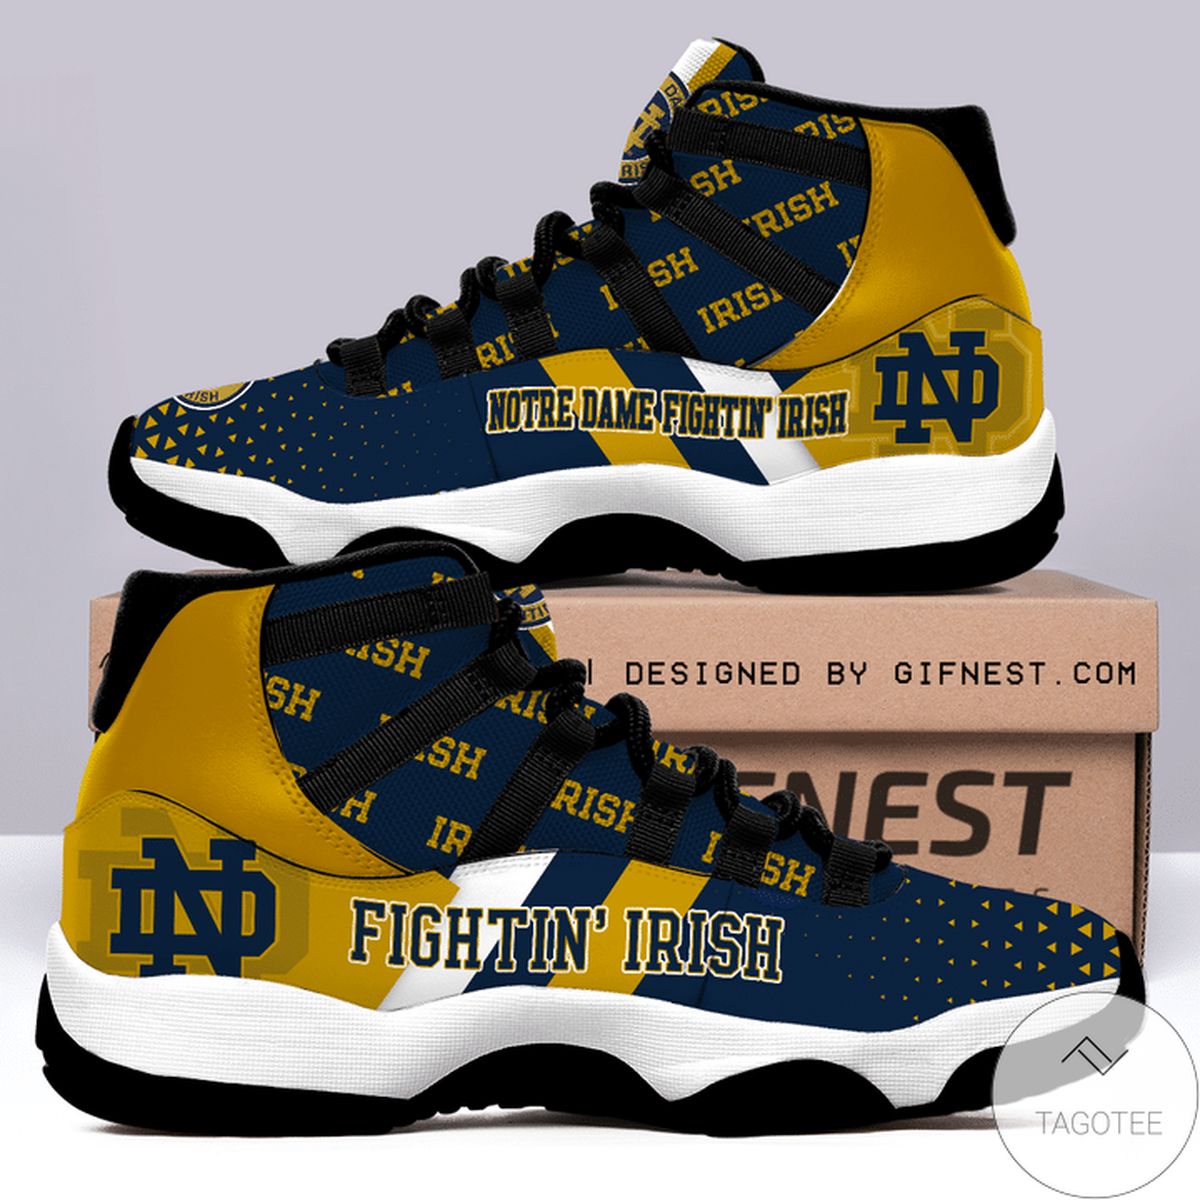 Notre Dame Fighting Irish Air Jordan 11 Shoes